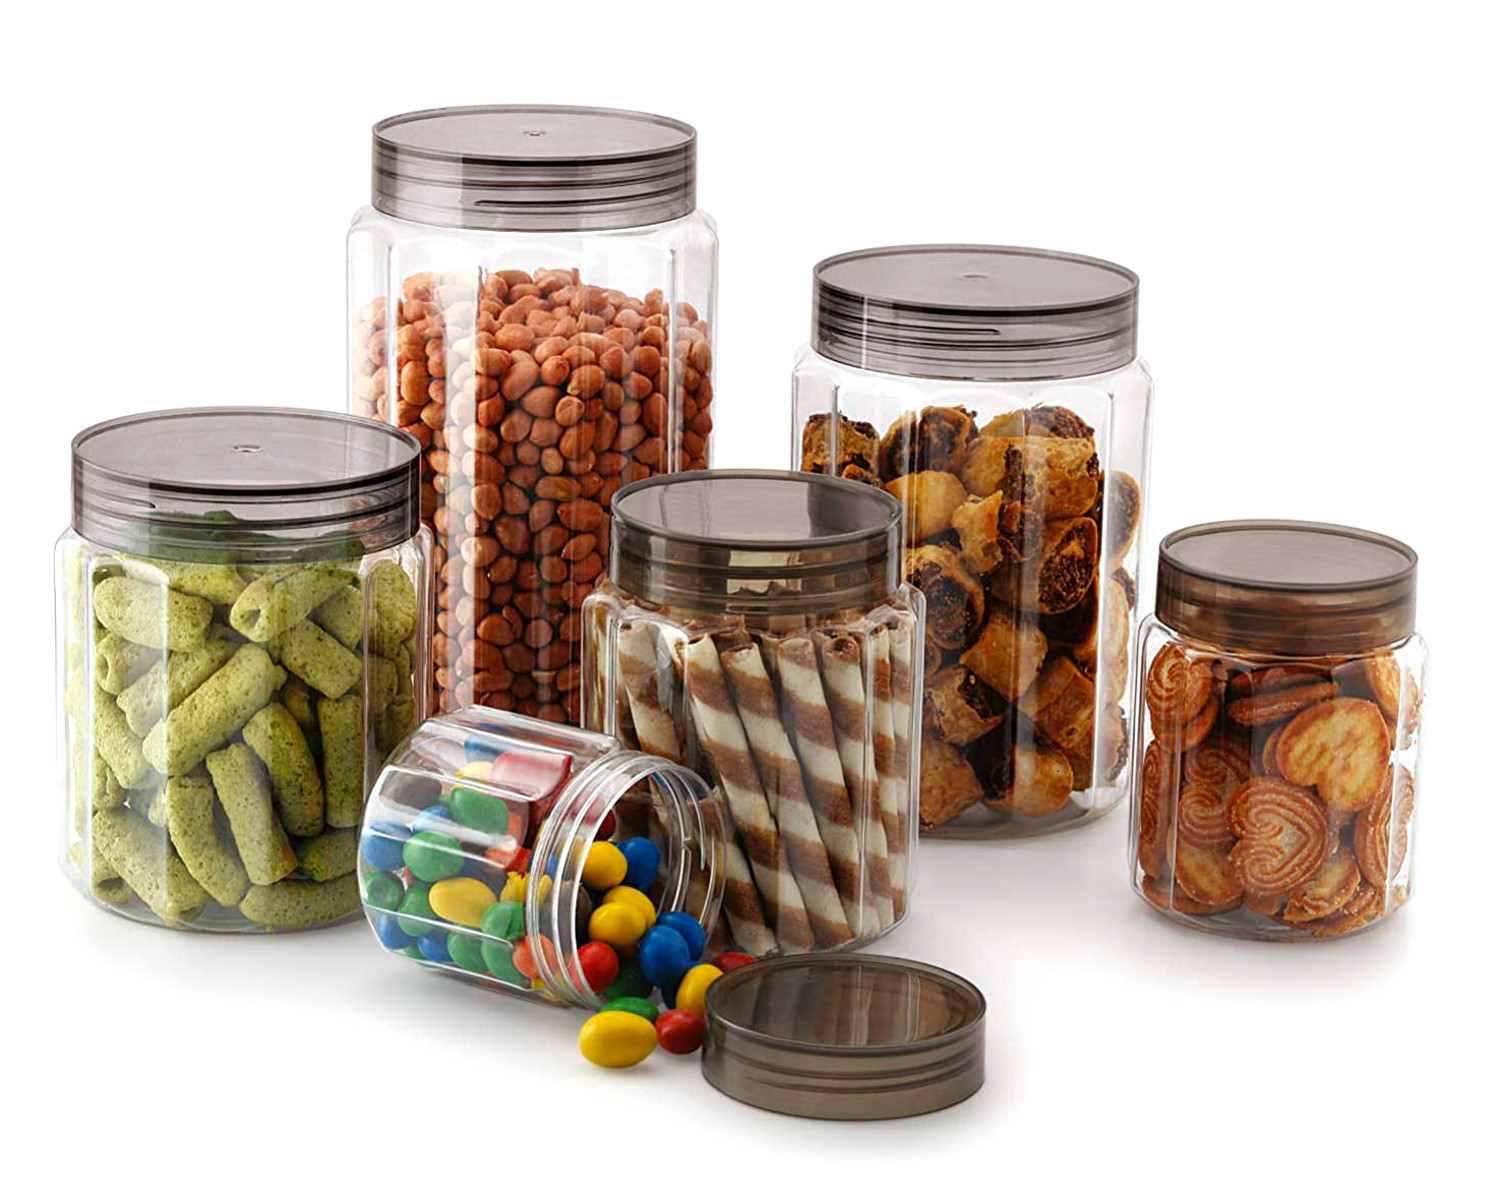 Kuber Industries Air Tight Food Grade Multiuses Tranasaparent Plastic Container Set, Set of 18 (Brown)